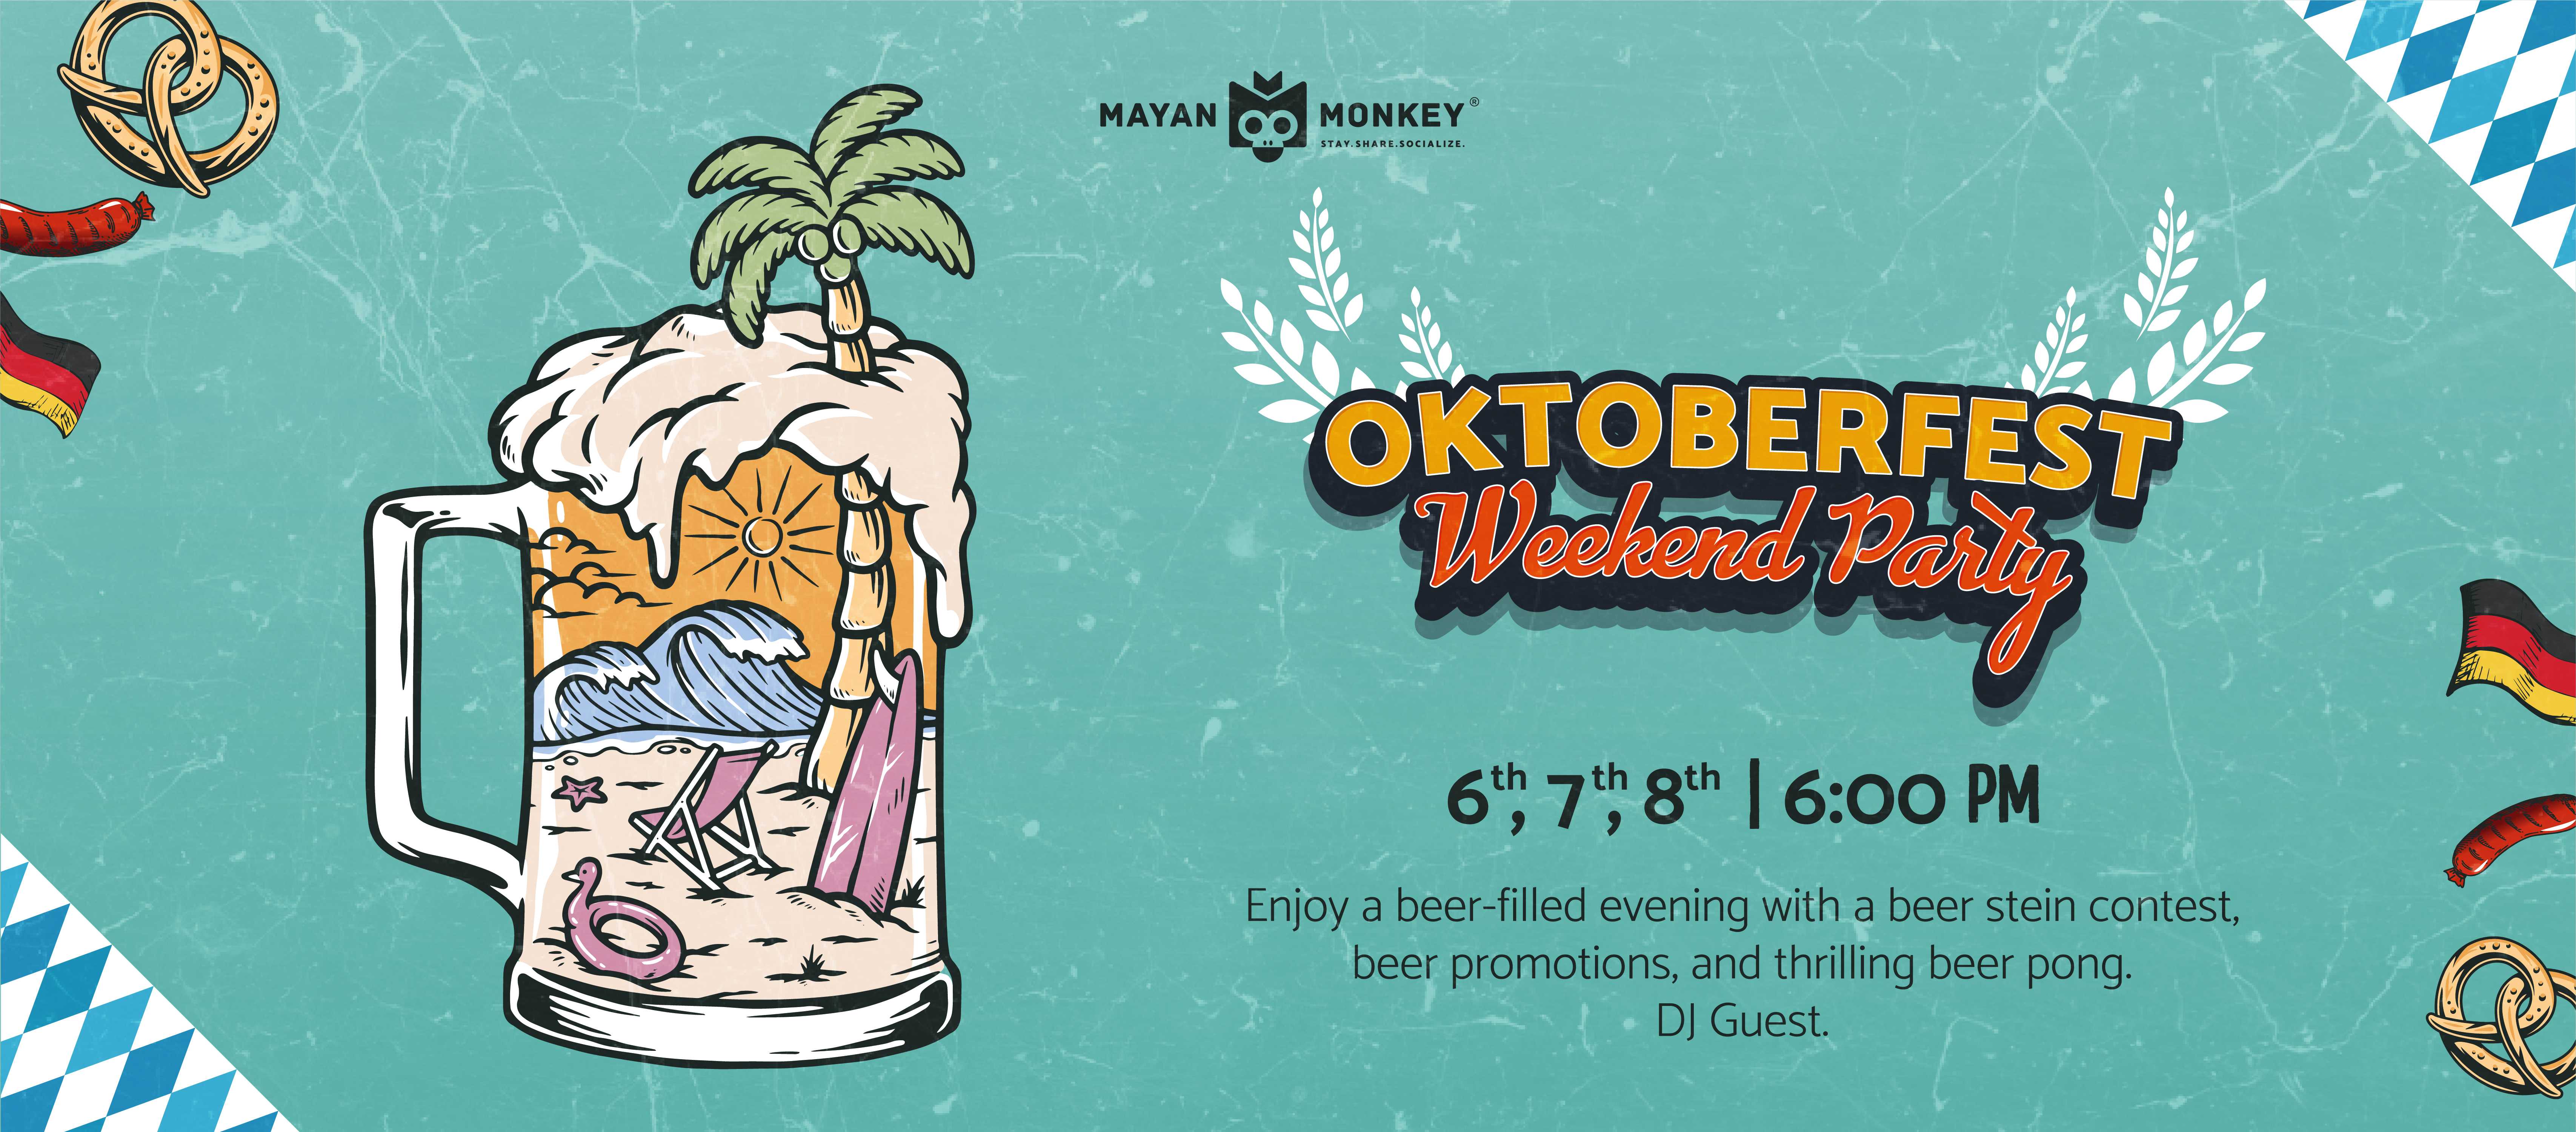 Fin de semana de Oktoberfest en Mayan Monkey